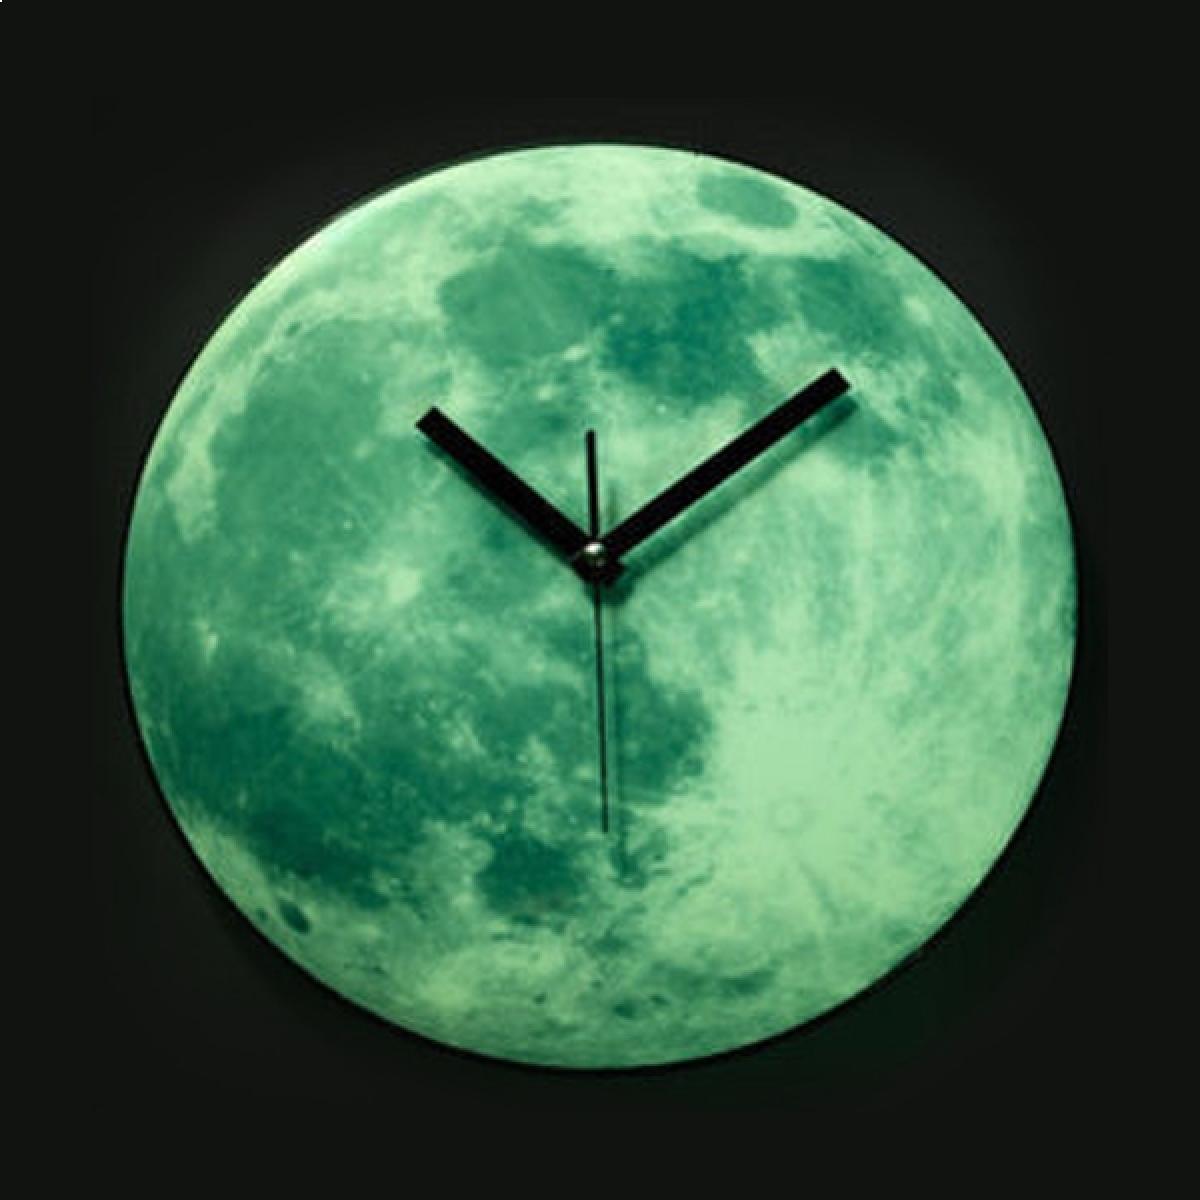 Totalcadeau - Horloge murale forme de lune brillante - Horloges, pendules